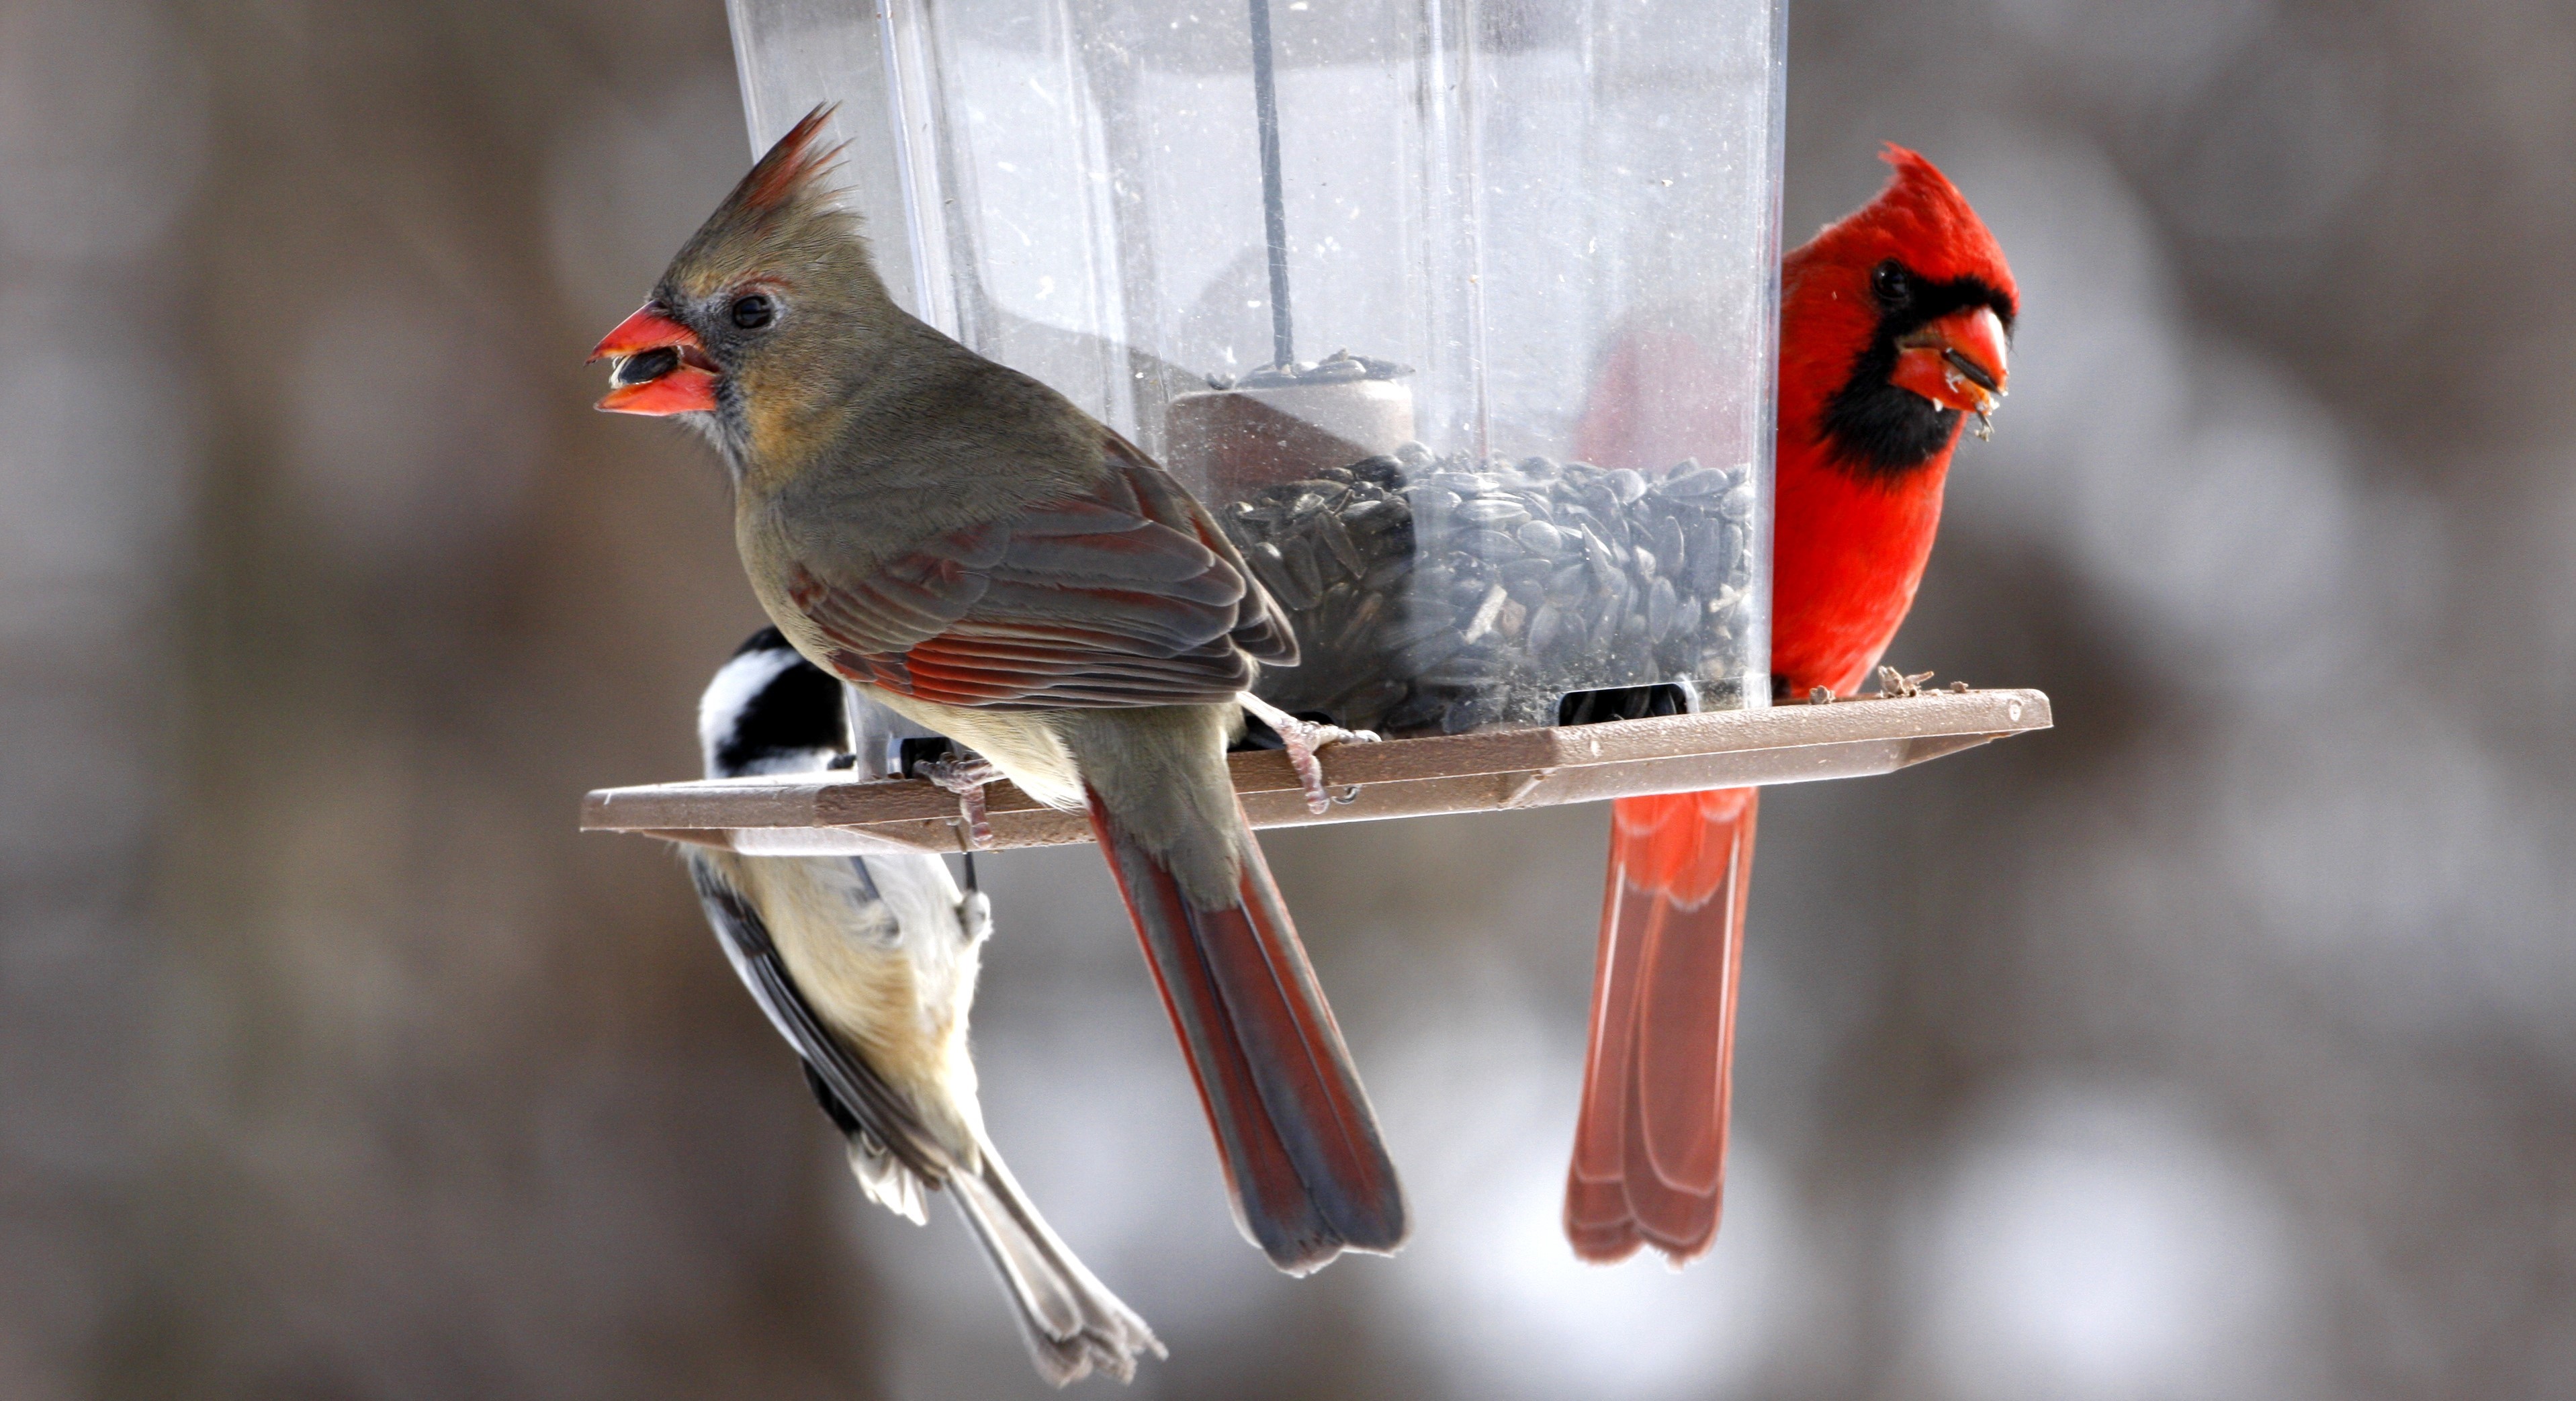 Two cardinals at a bird feeder.